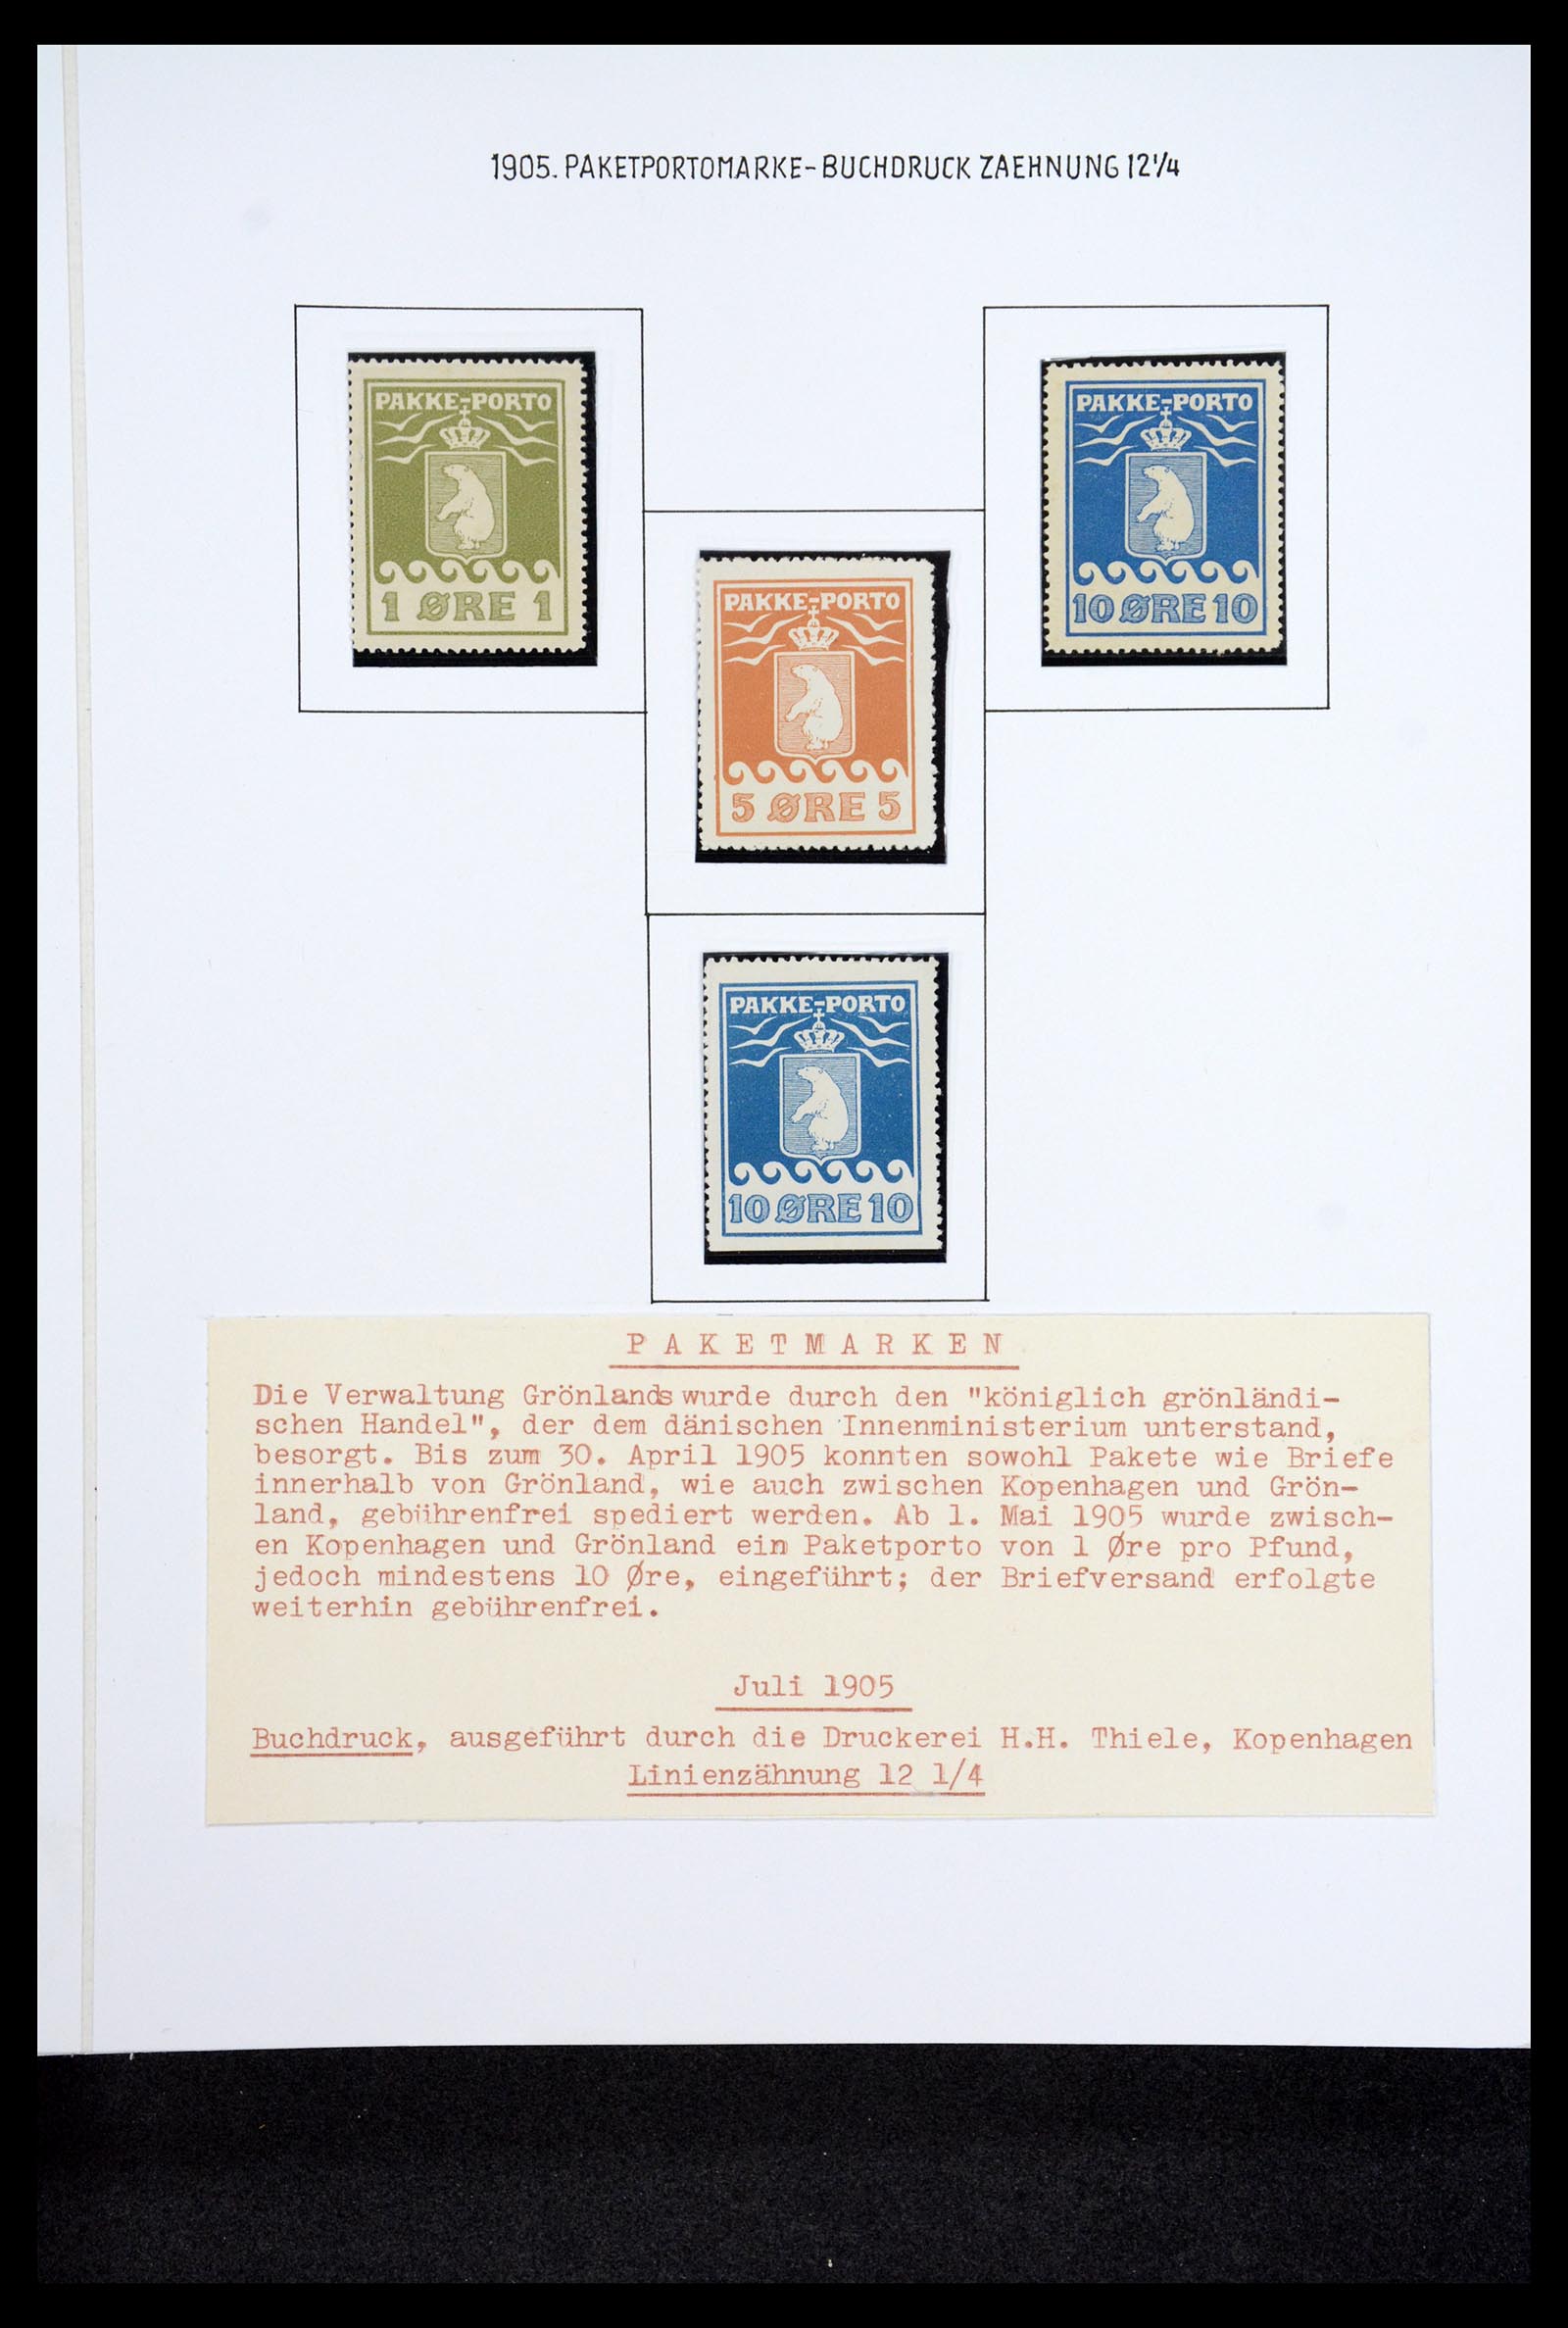 36748 001 - Stamp collection 36748 Greenland pakke-porto 1905-1930.